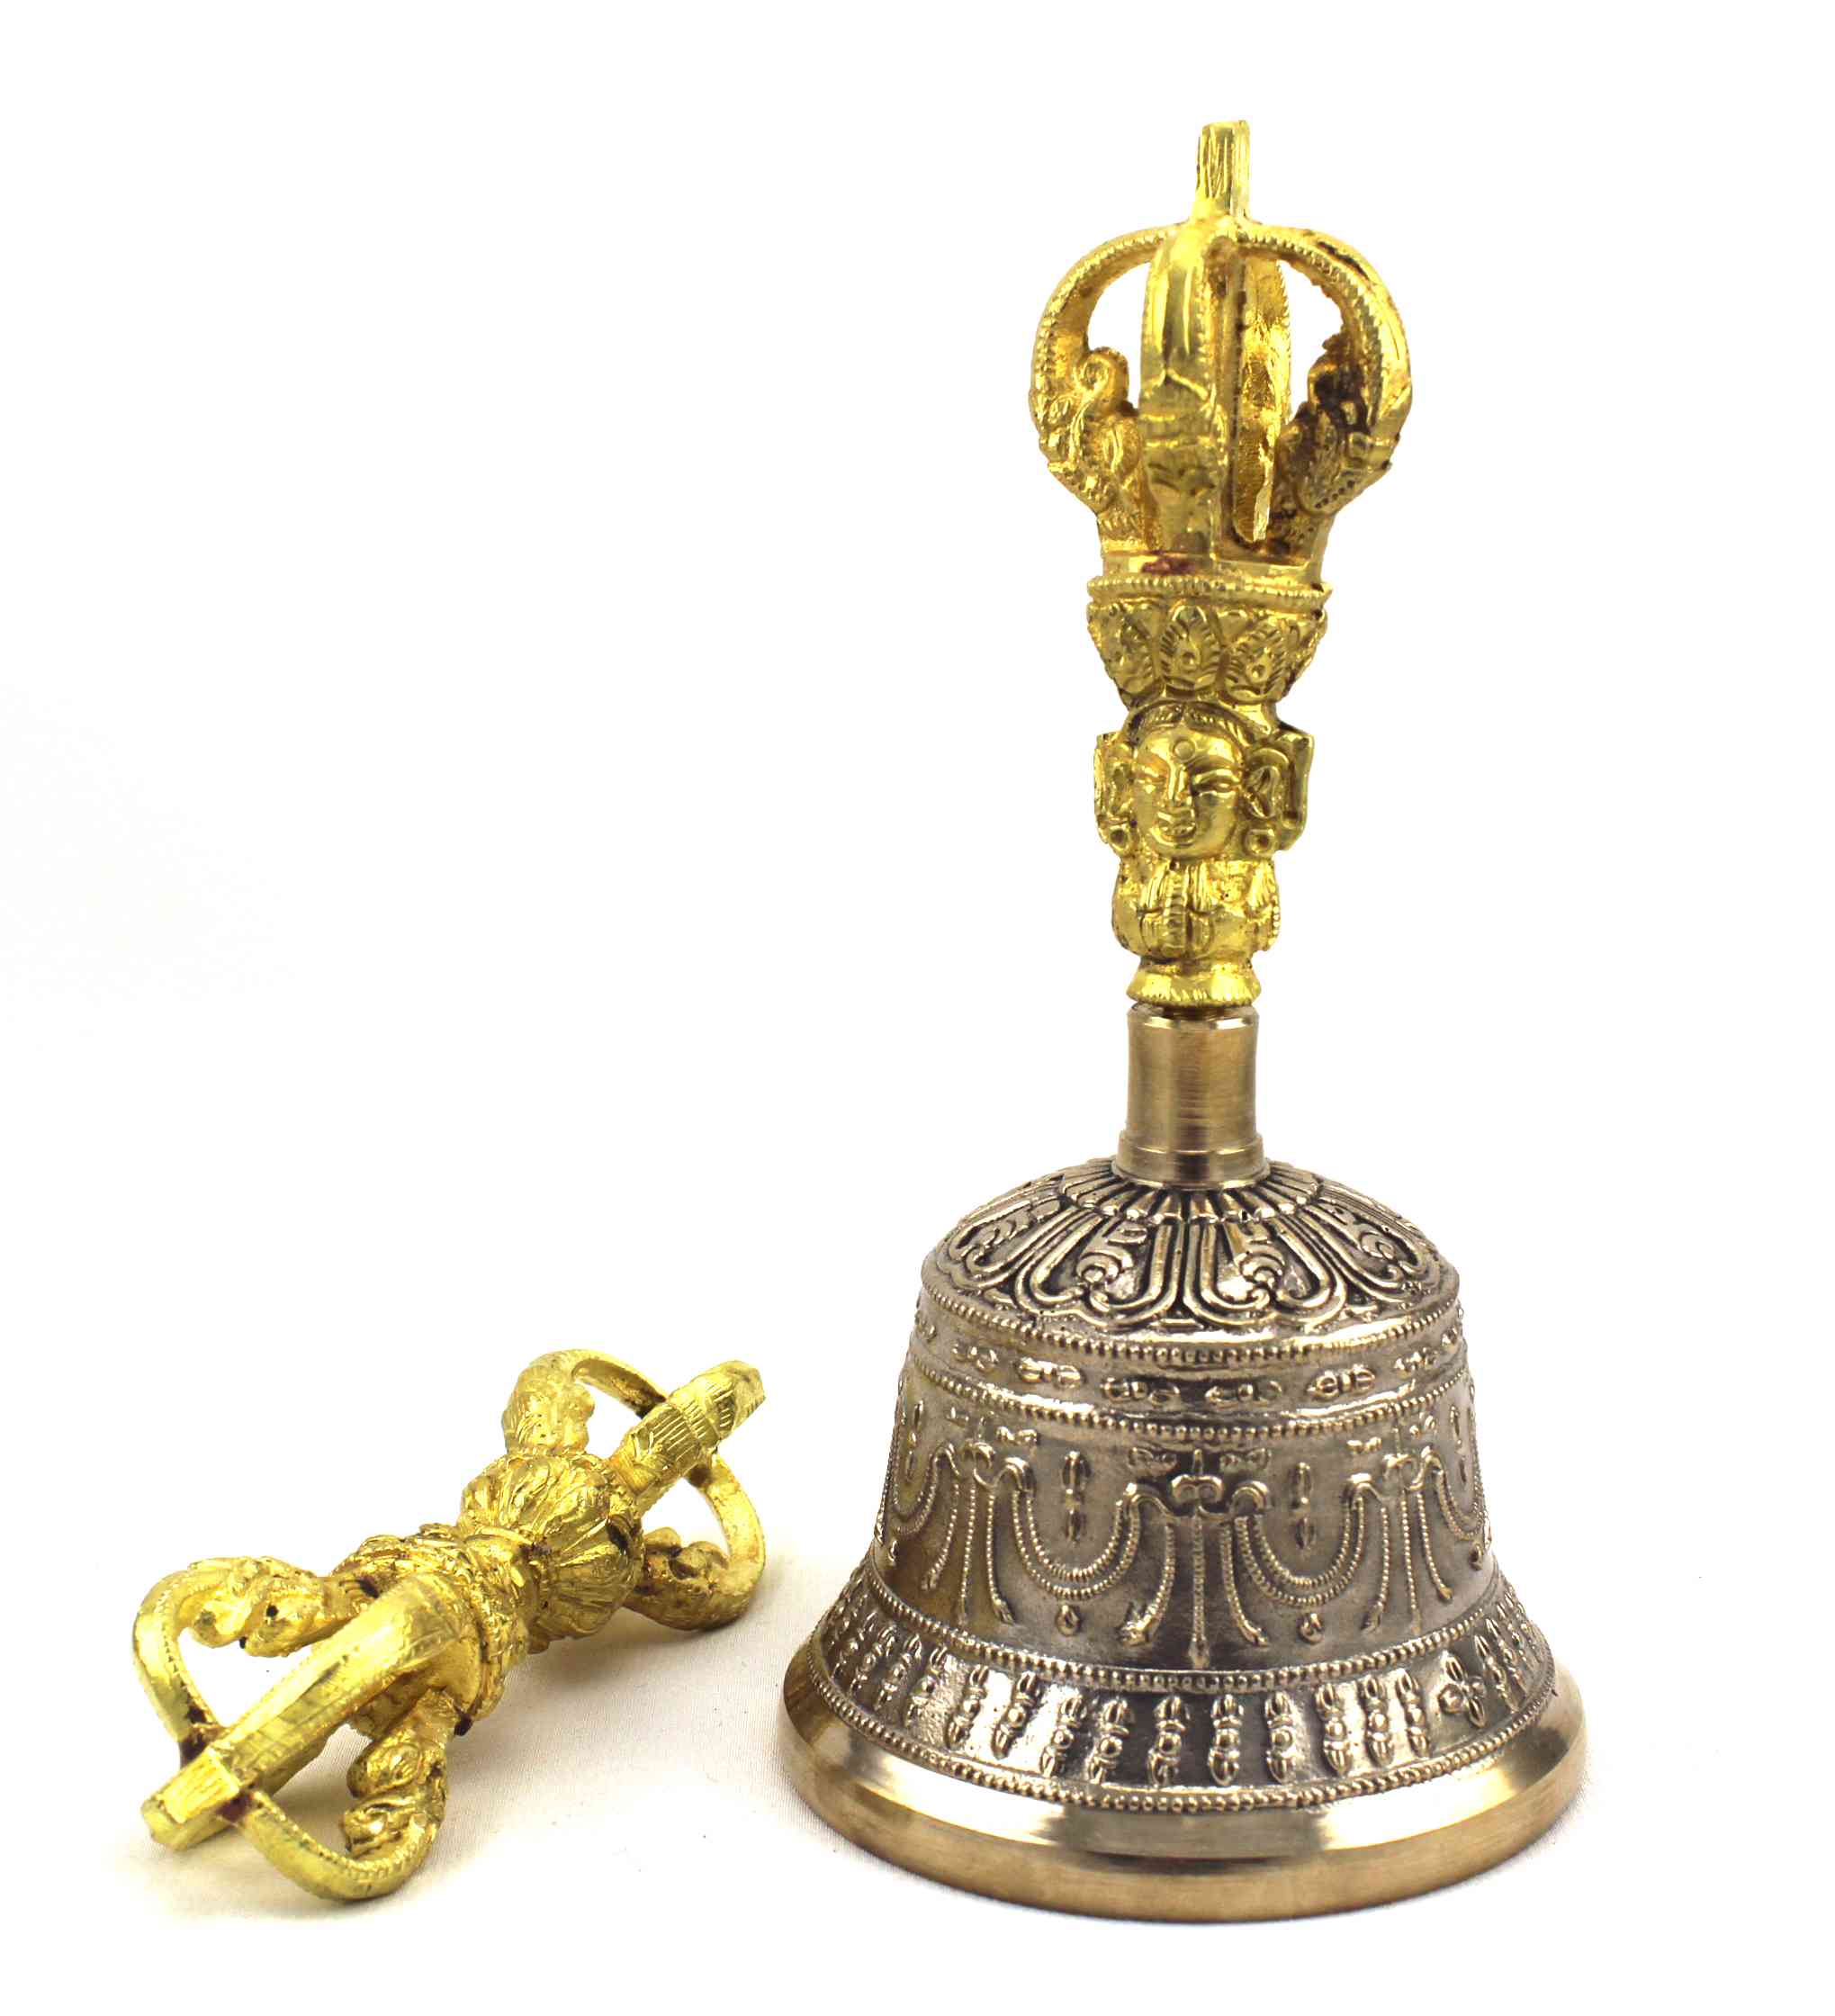 Tibetský zvonček Bodhisattva Premium malý 22-10